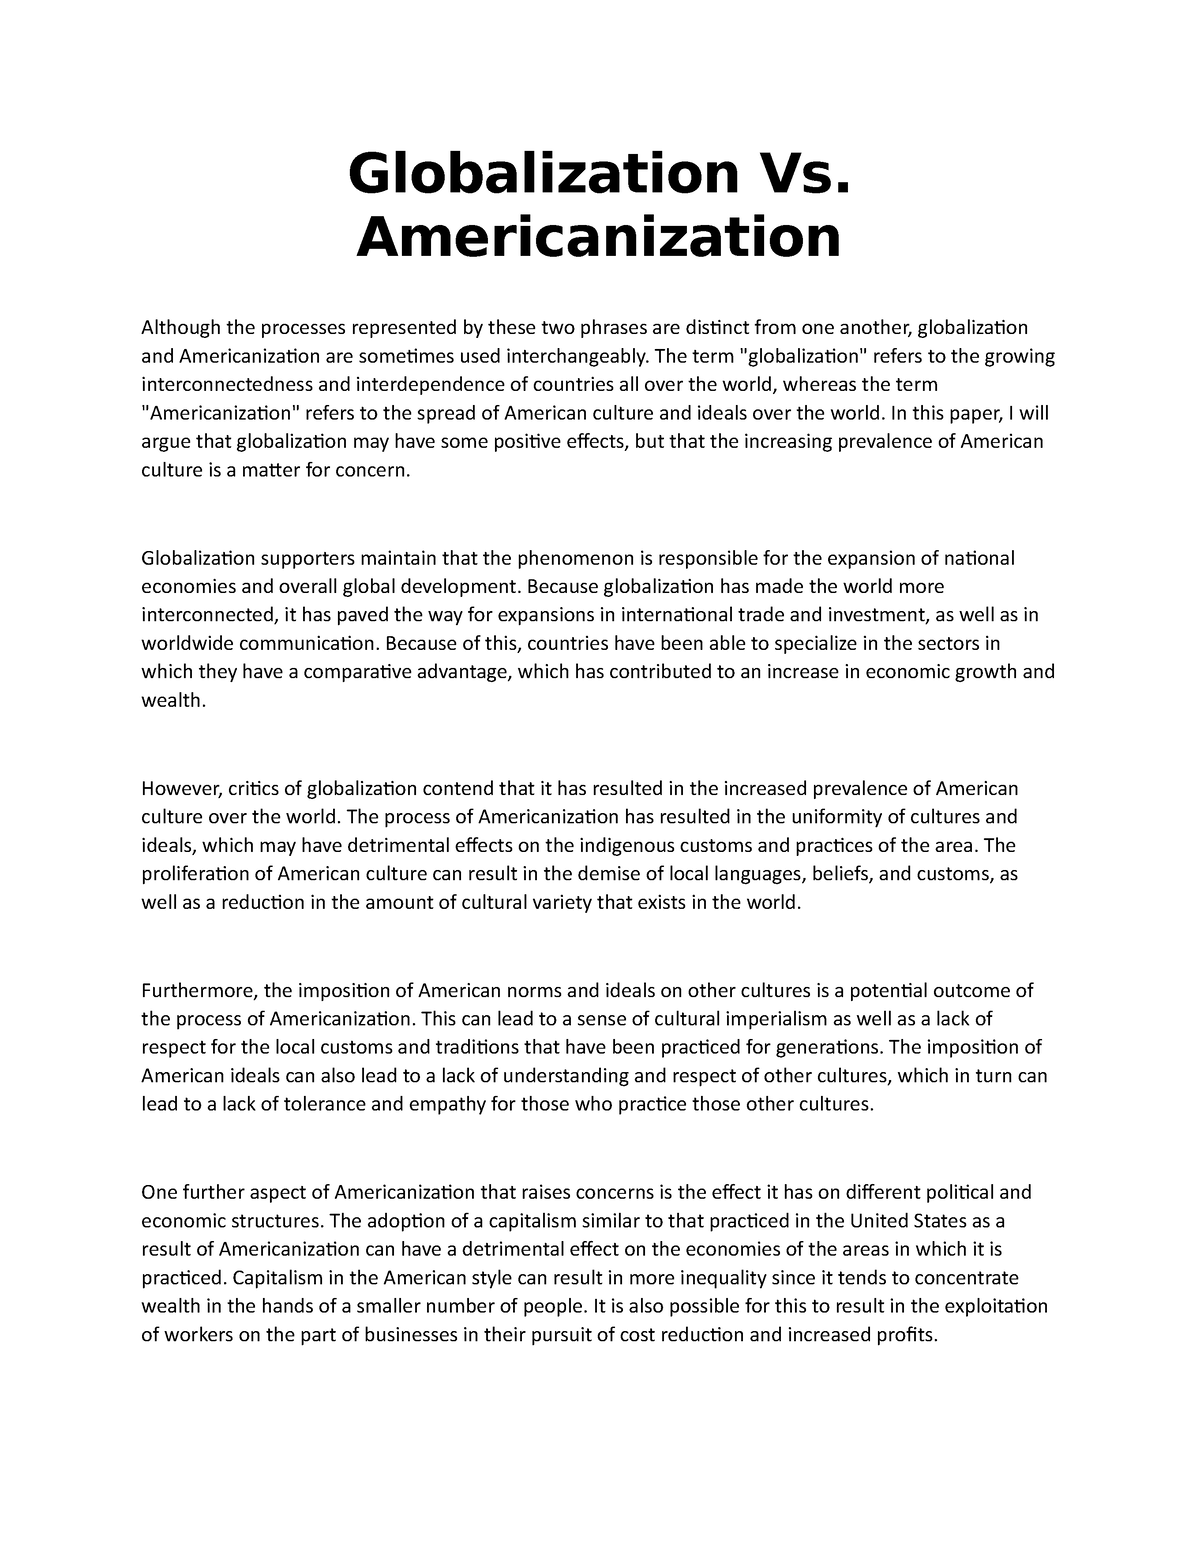 argumentative essay topics globalization